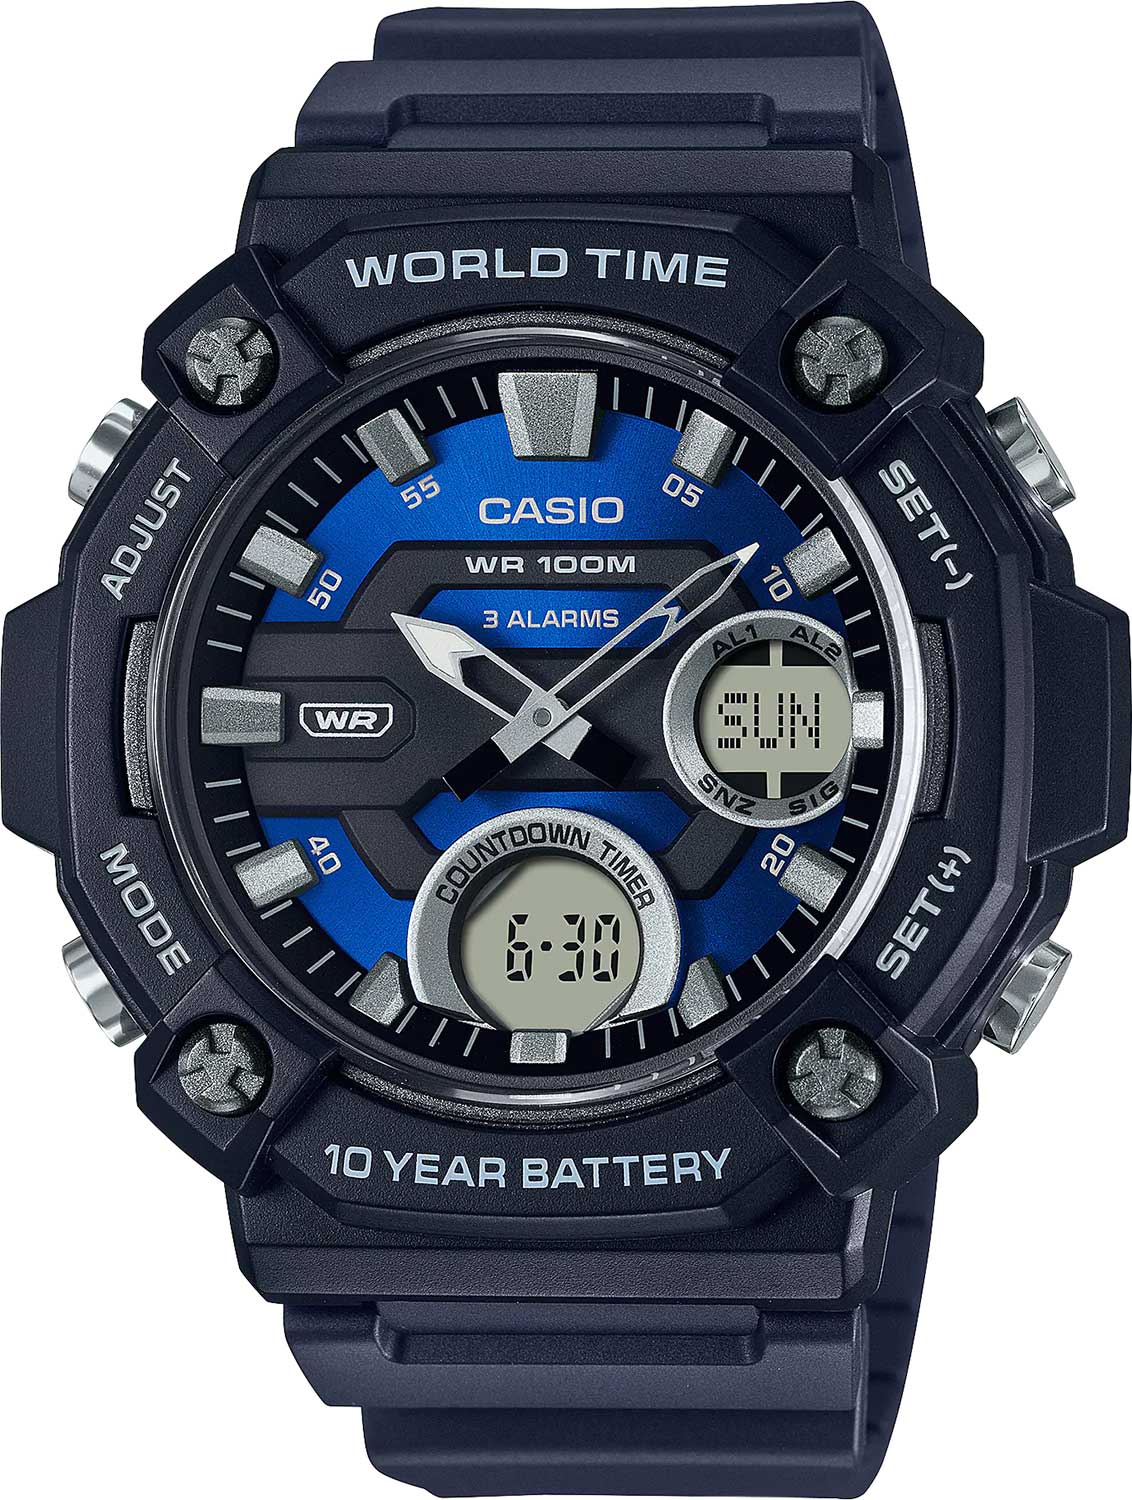 Наручные часы Casio AEQ-120W-2A наручные часы casio aeq 120w 2a золотой черный